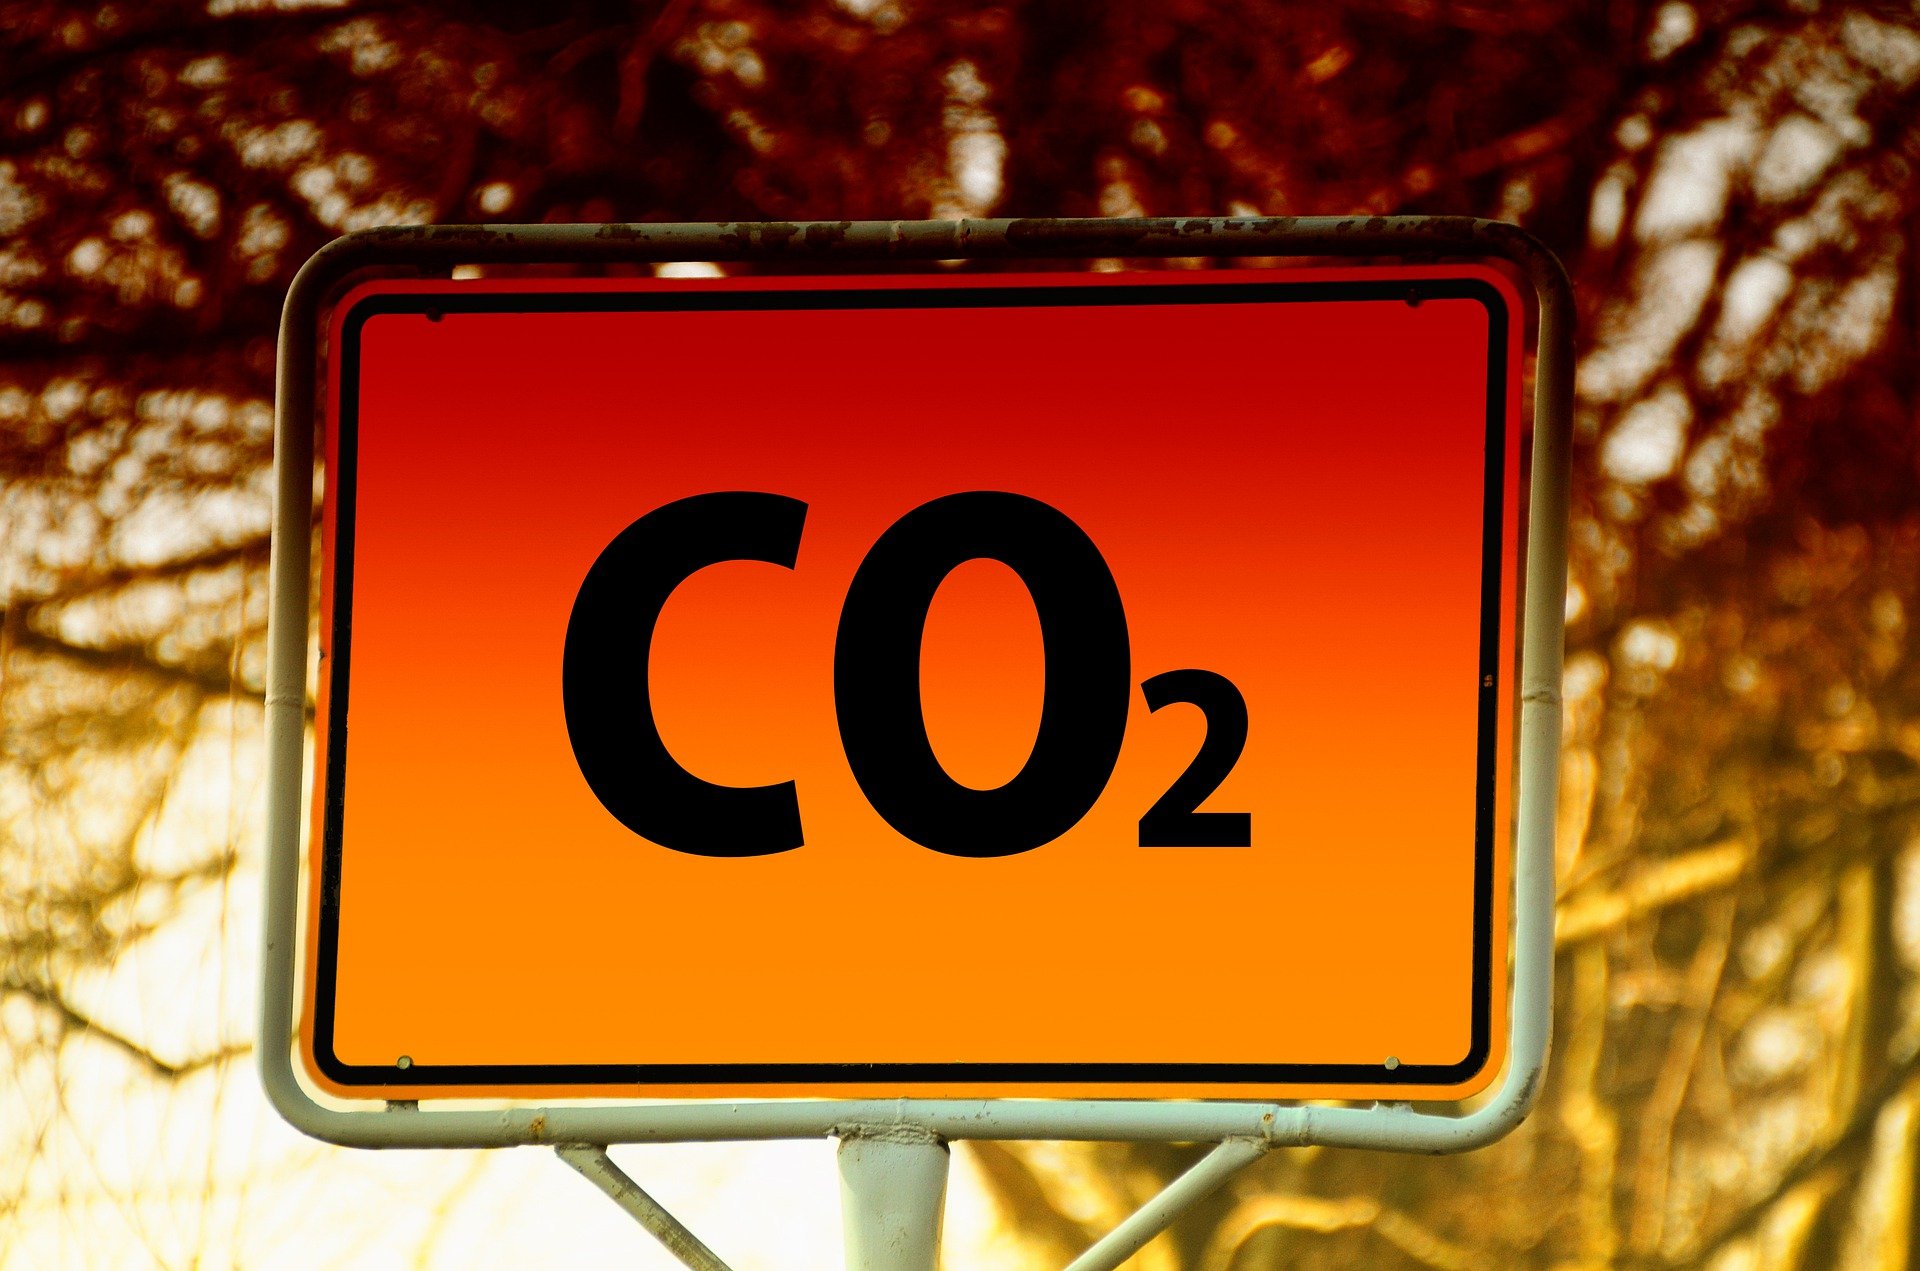 Fiktives Straßenschild "CO2" (in rot-orange)